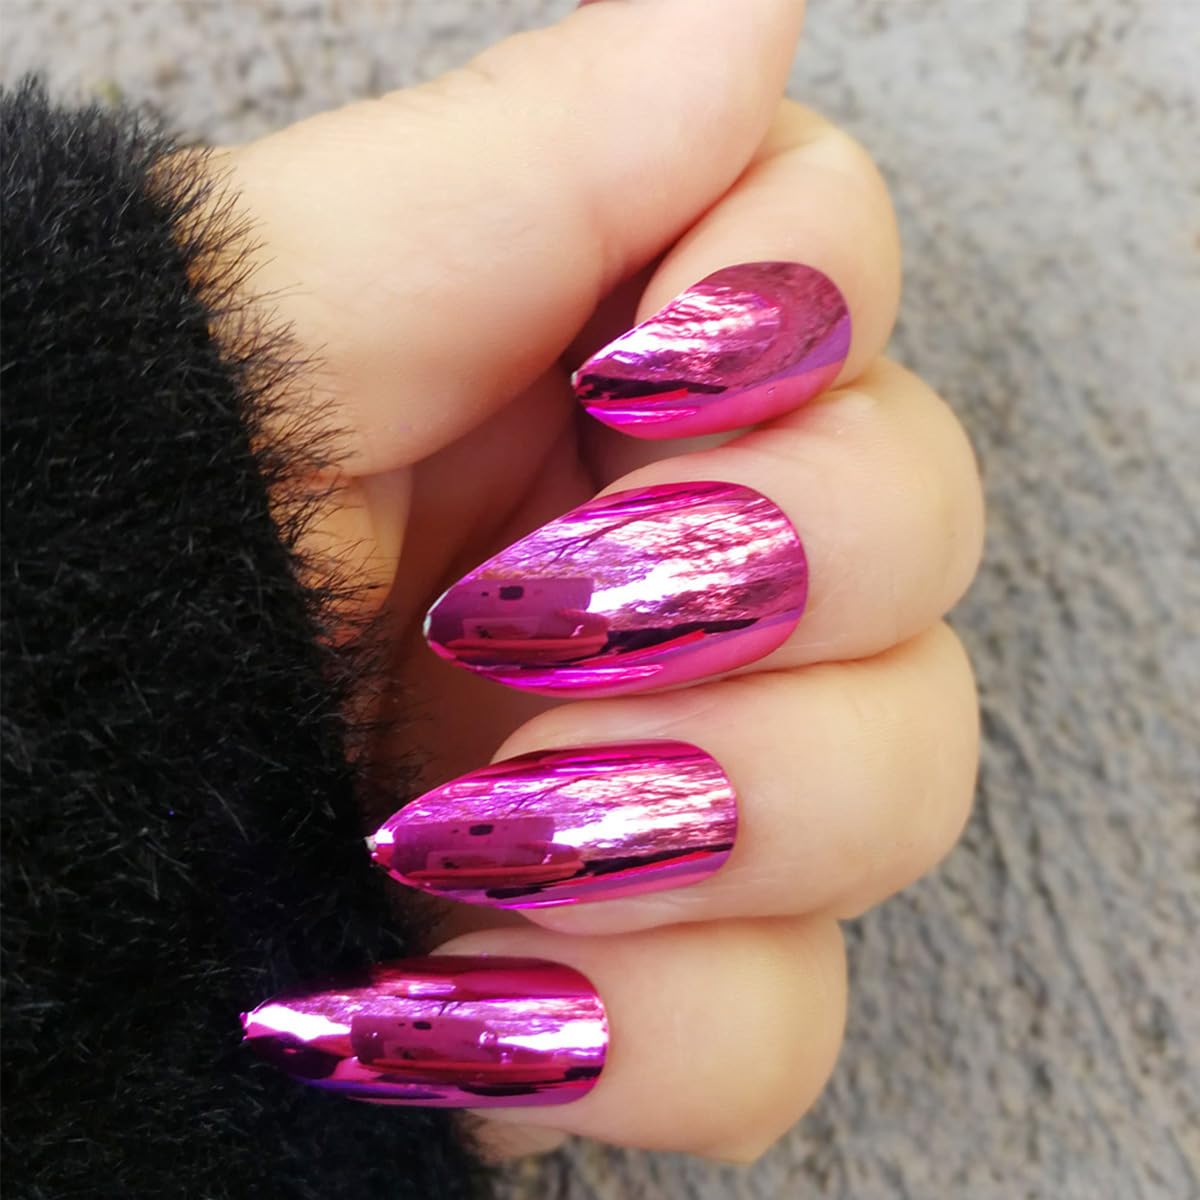 Valentine Pink Chrome Nail Powder Mirror Effect Metallic Dust 3D Holographic Glitter Glazed Manicure Decoration Reflective Pigment for DIY Gel Polish Nail Art Design, Resin Craft, Gifts (3 Jar)